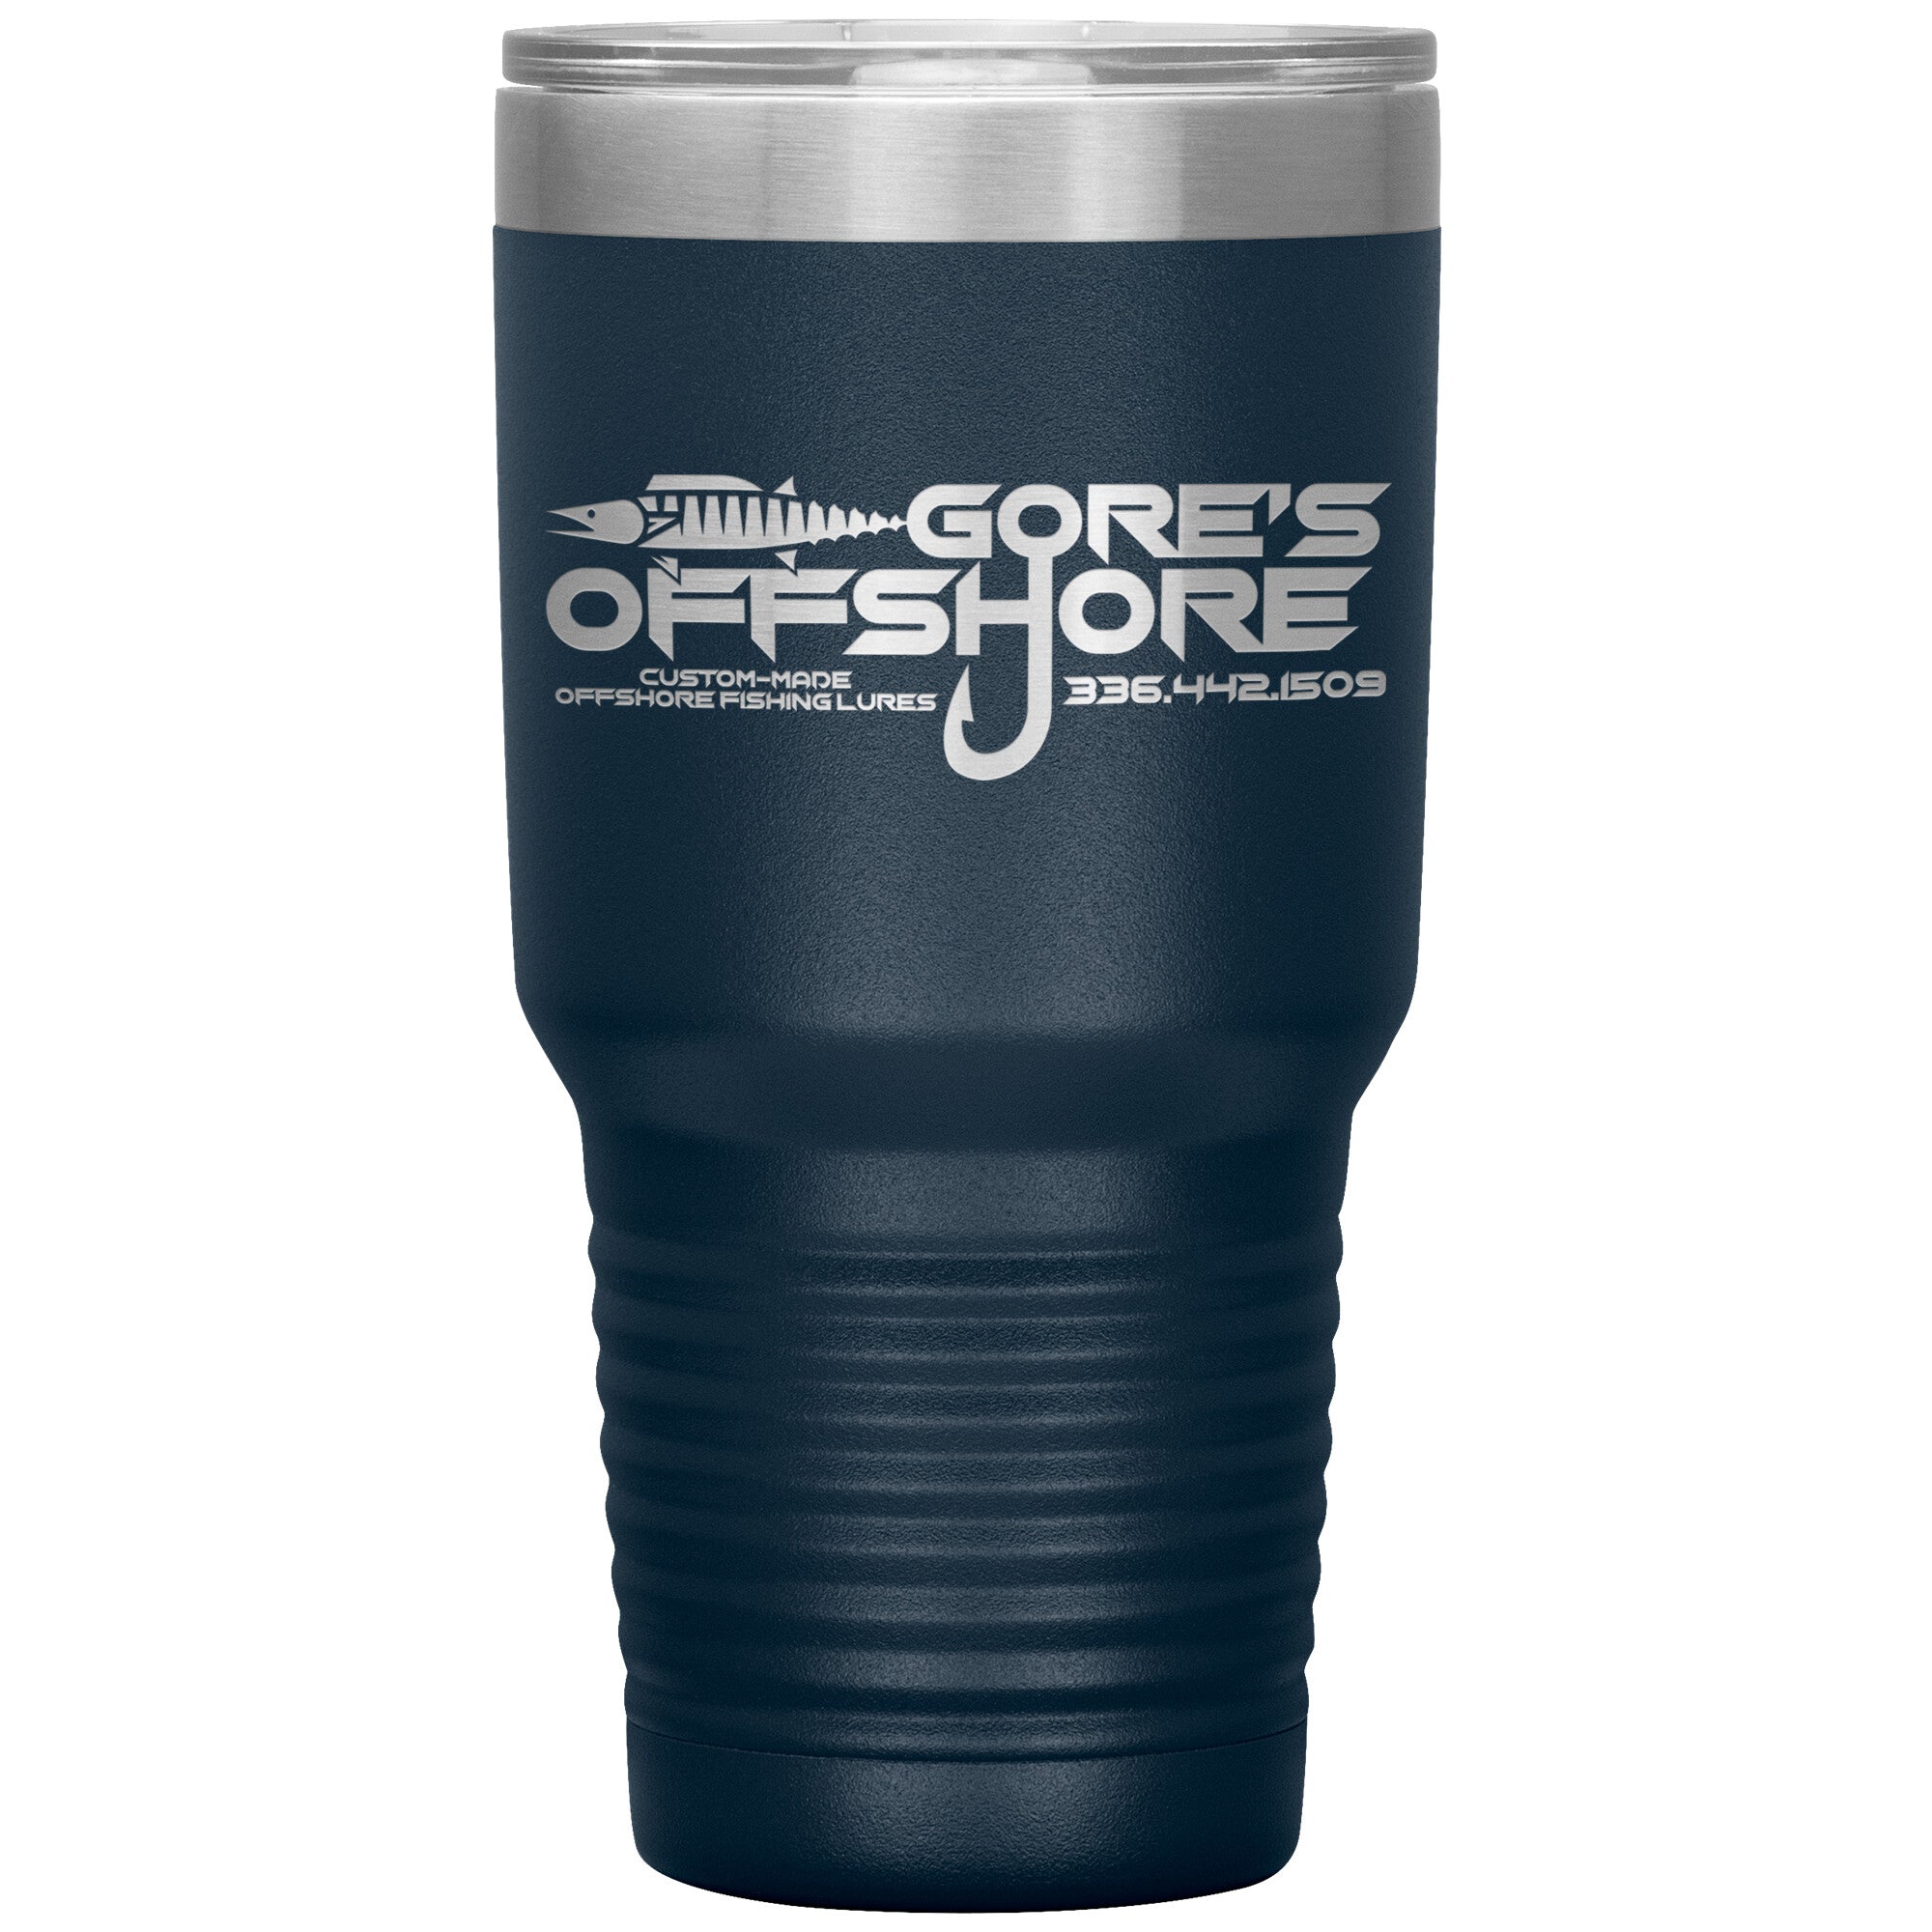 Gore's Offshore-30oz Insulated Tumbler - BIZ Team Shop